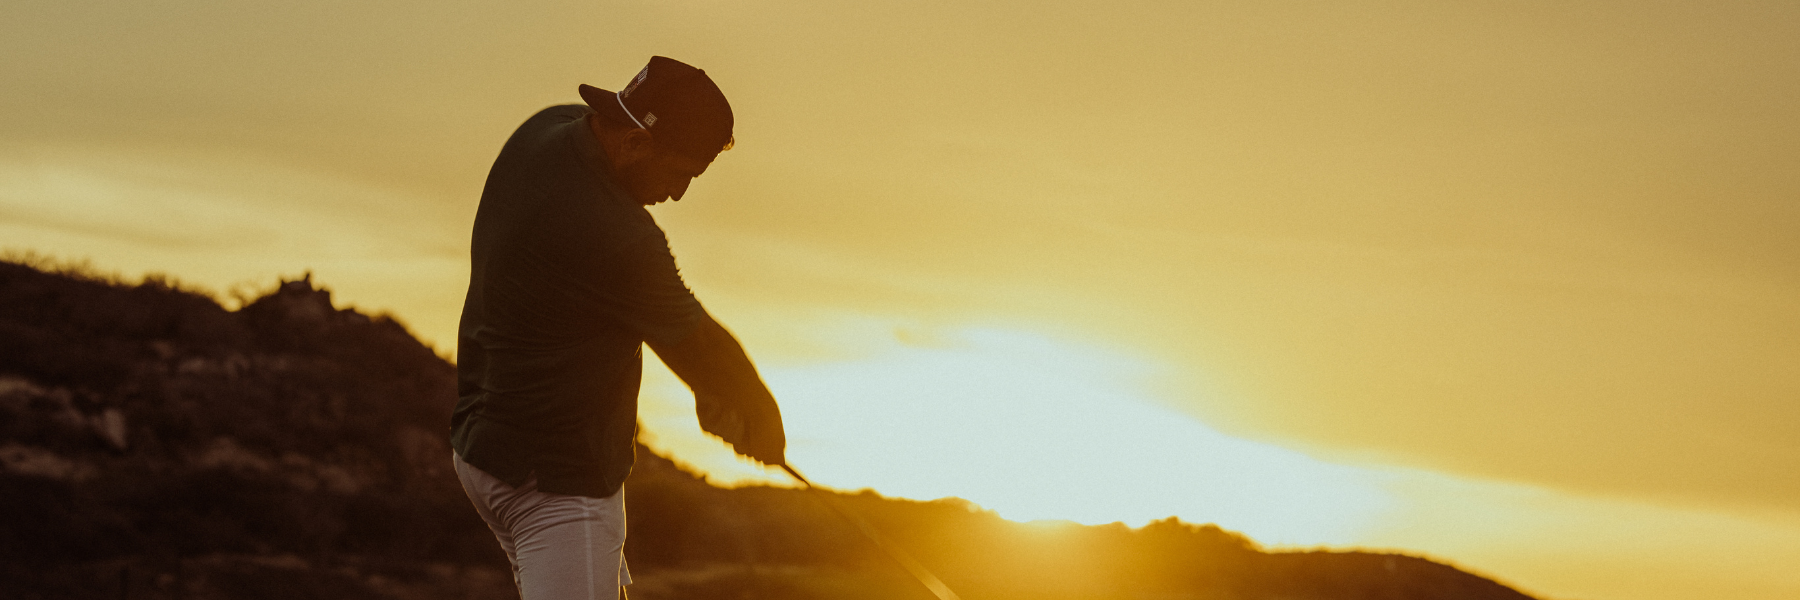 man hitting golf ball in the sunset